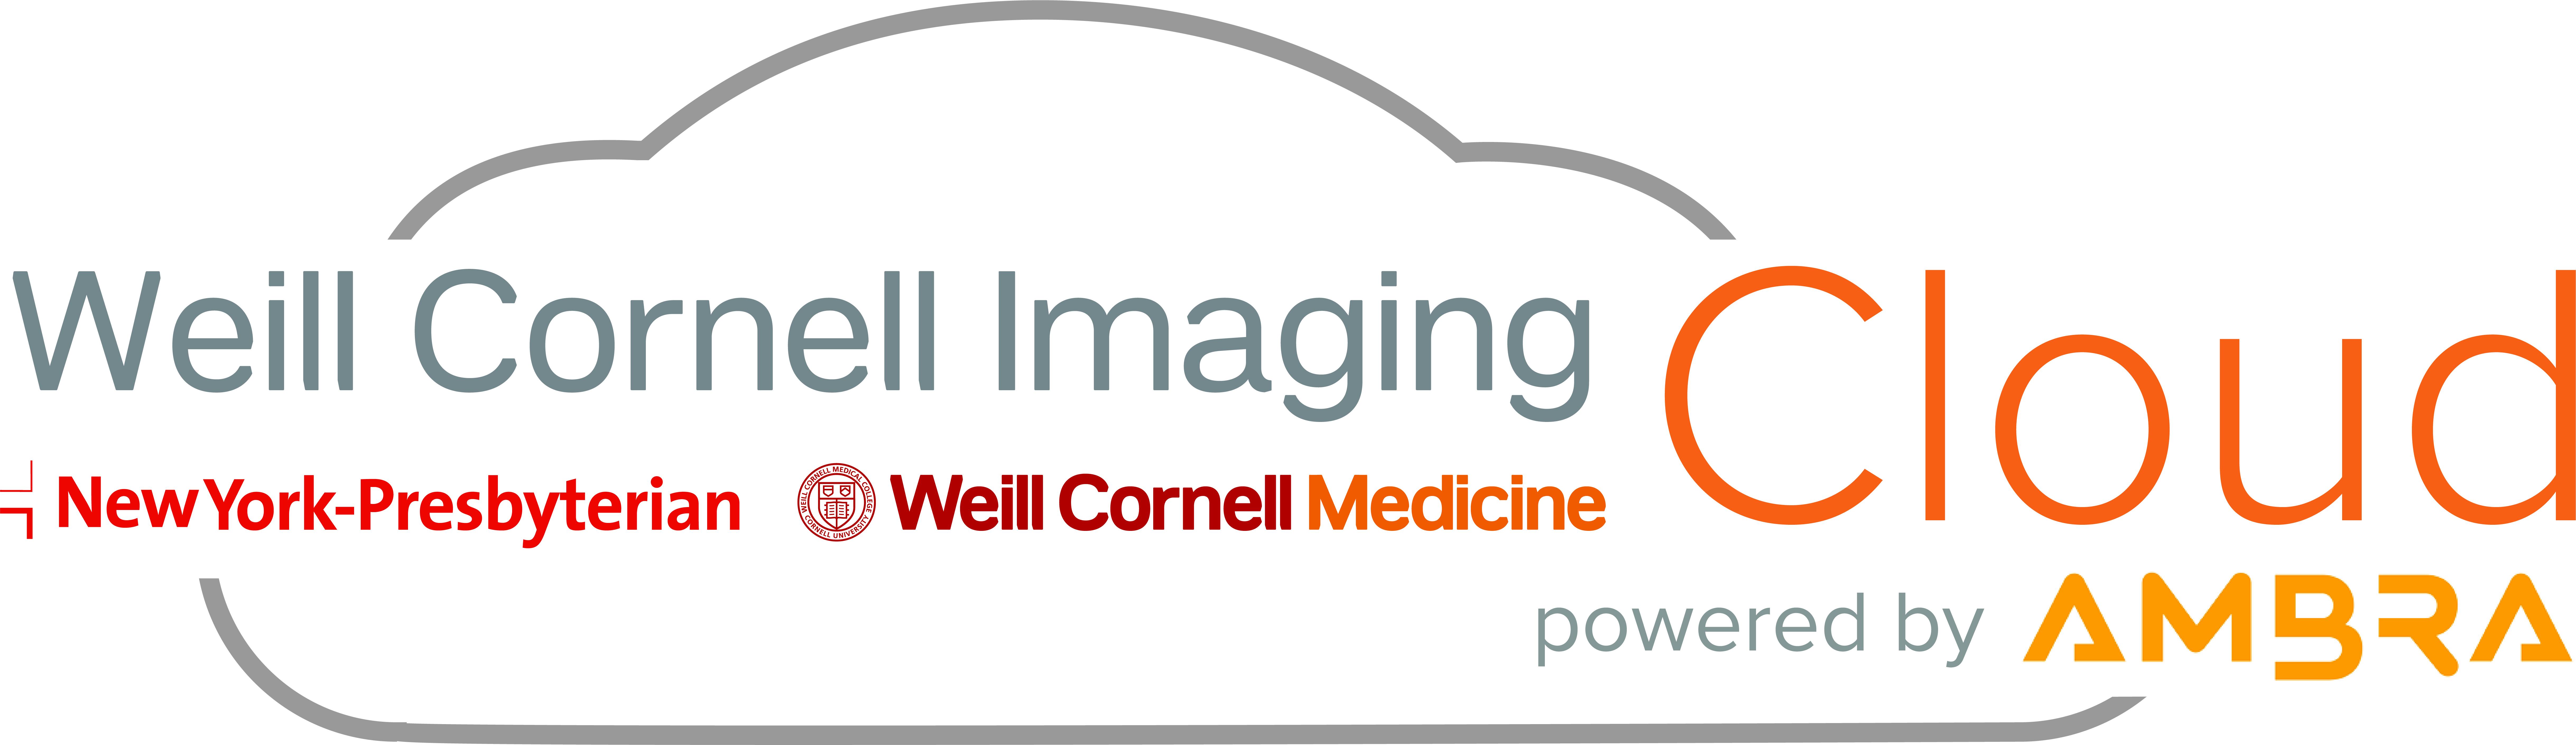 Weill Cornell Imaging at NewYork-Presbyterian Cloud, powered by Ambra Logo